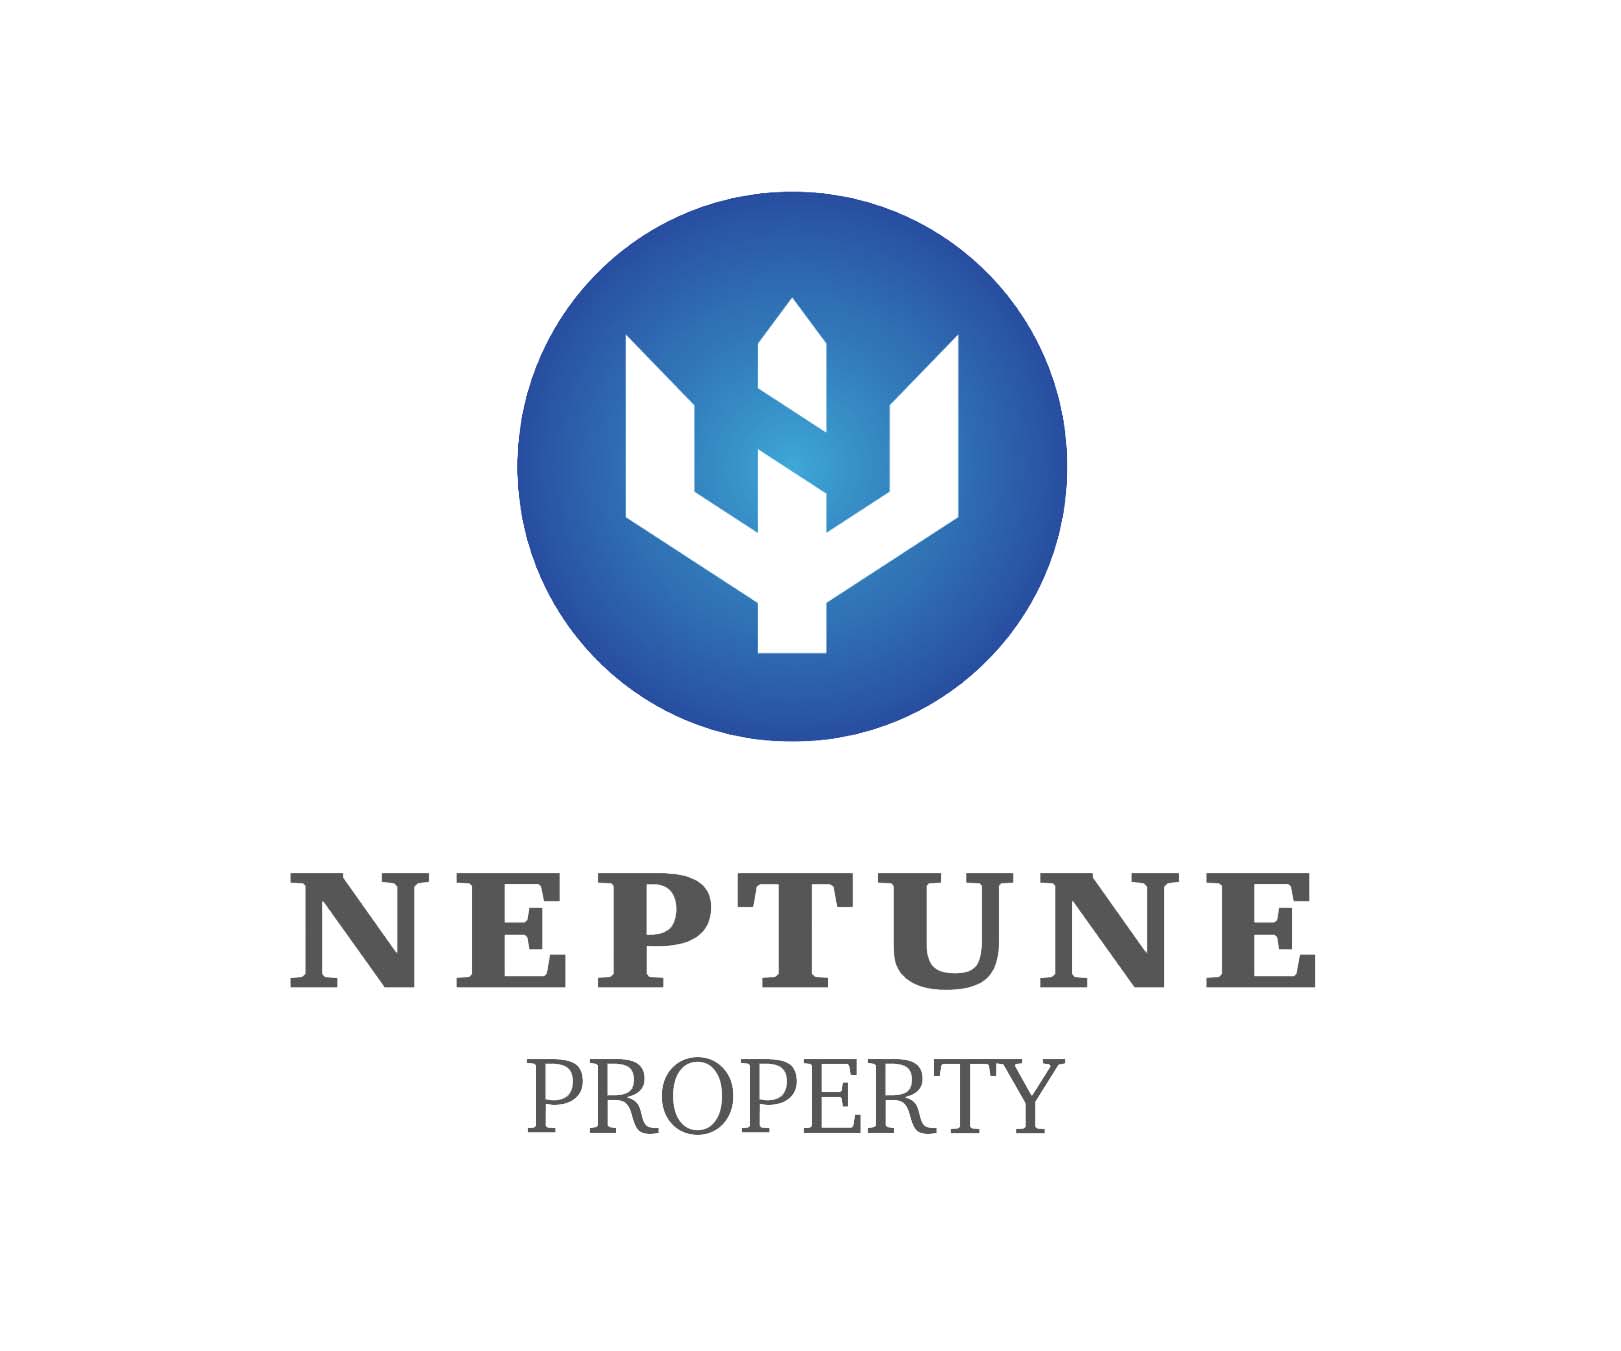 Neptune Property